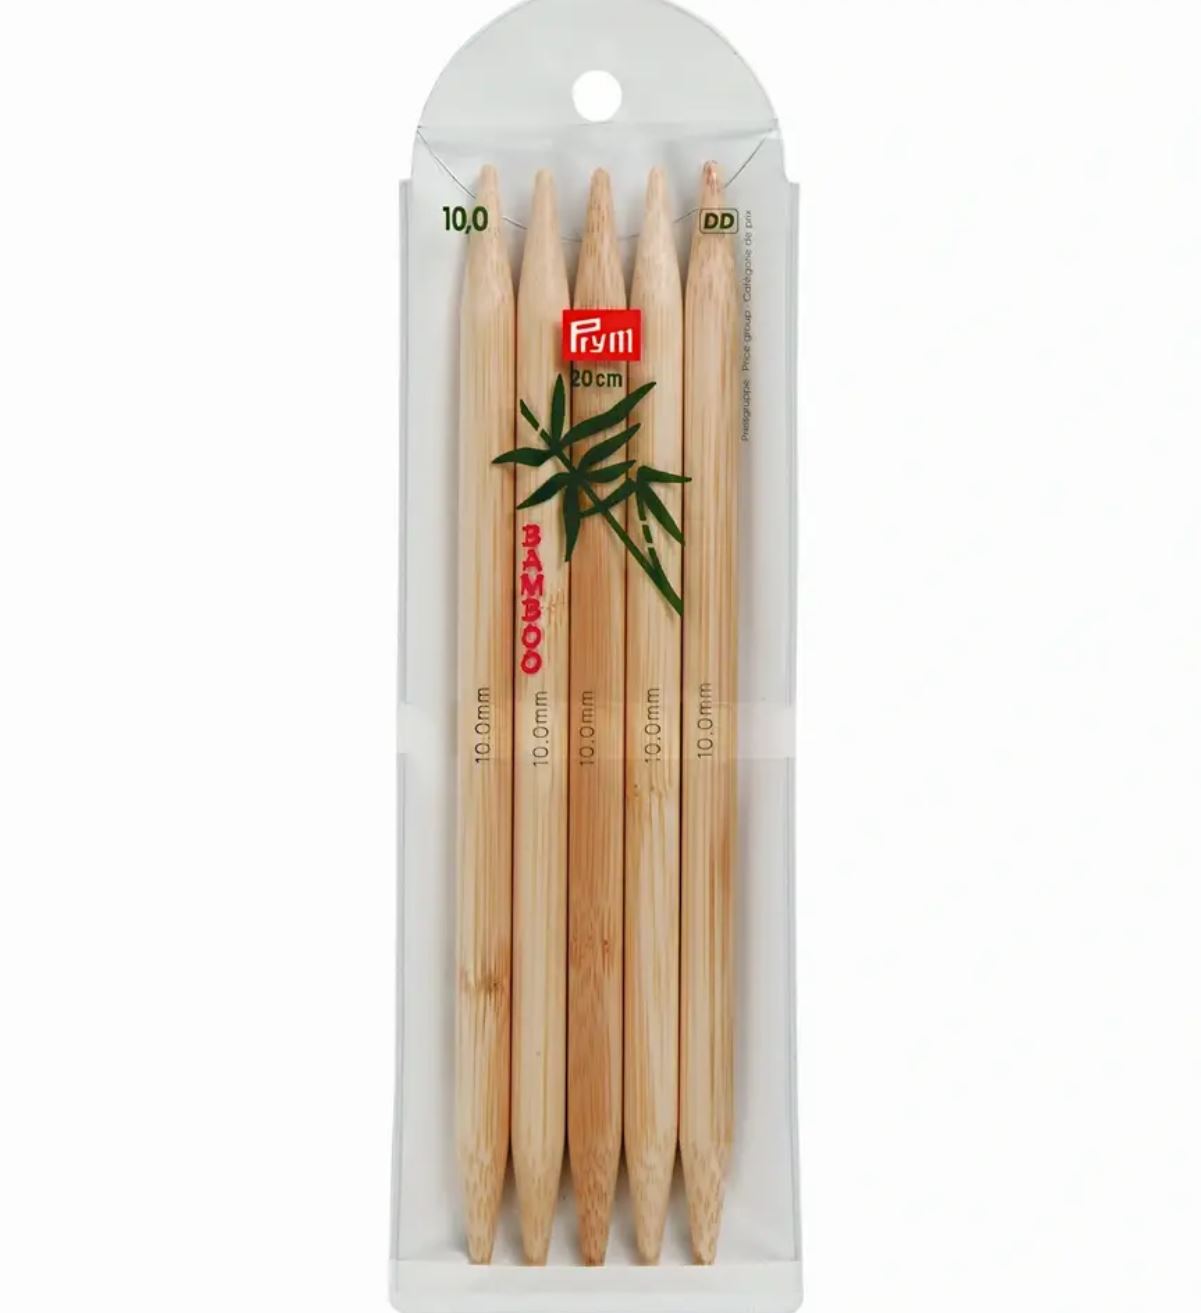 Prym Bamboo Settpinne 5stk - Bambus 10,0 - 20cm